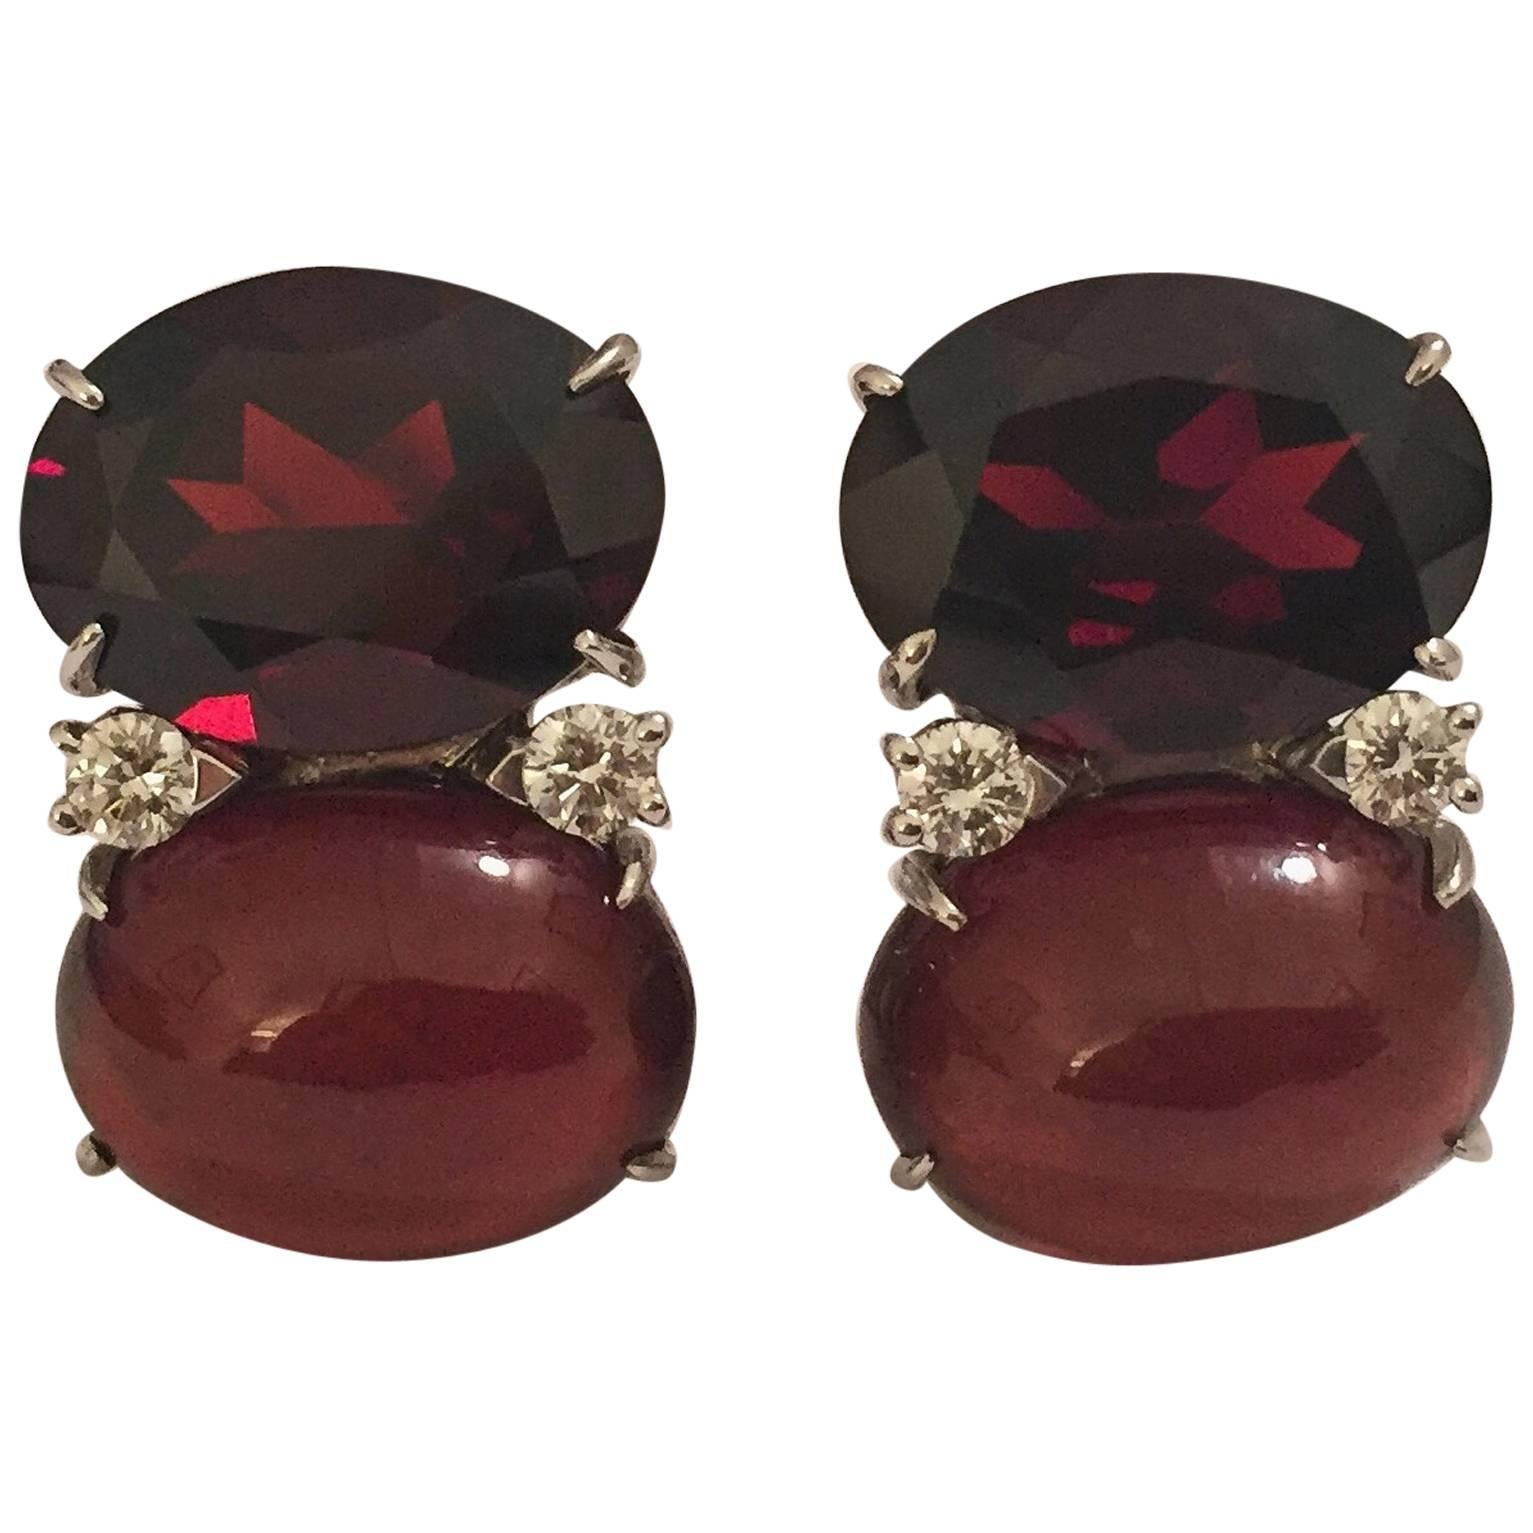 Grande GUM DROP Earrings with Garnet and Cabochon Garnet and Diamonds